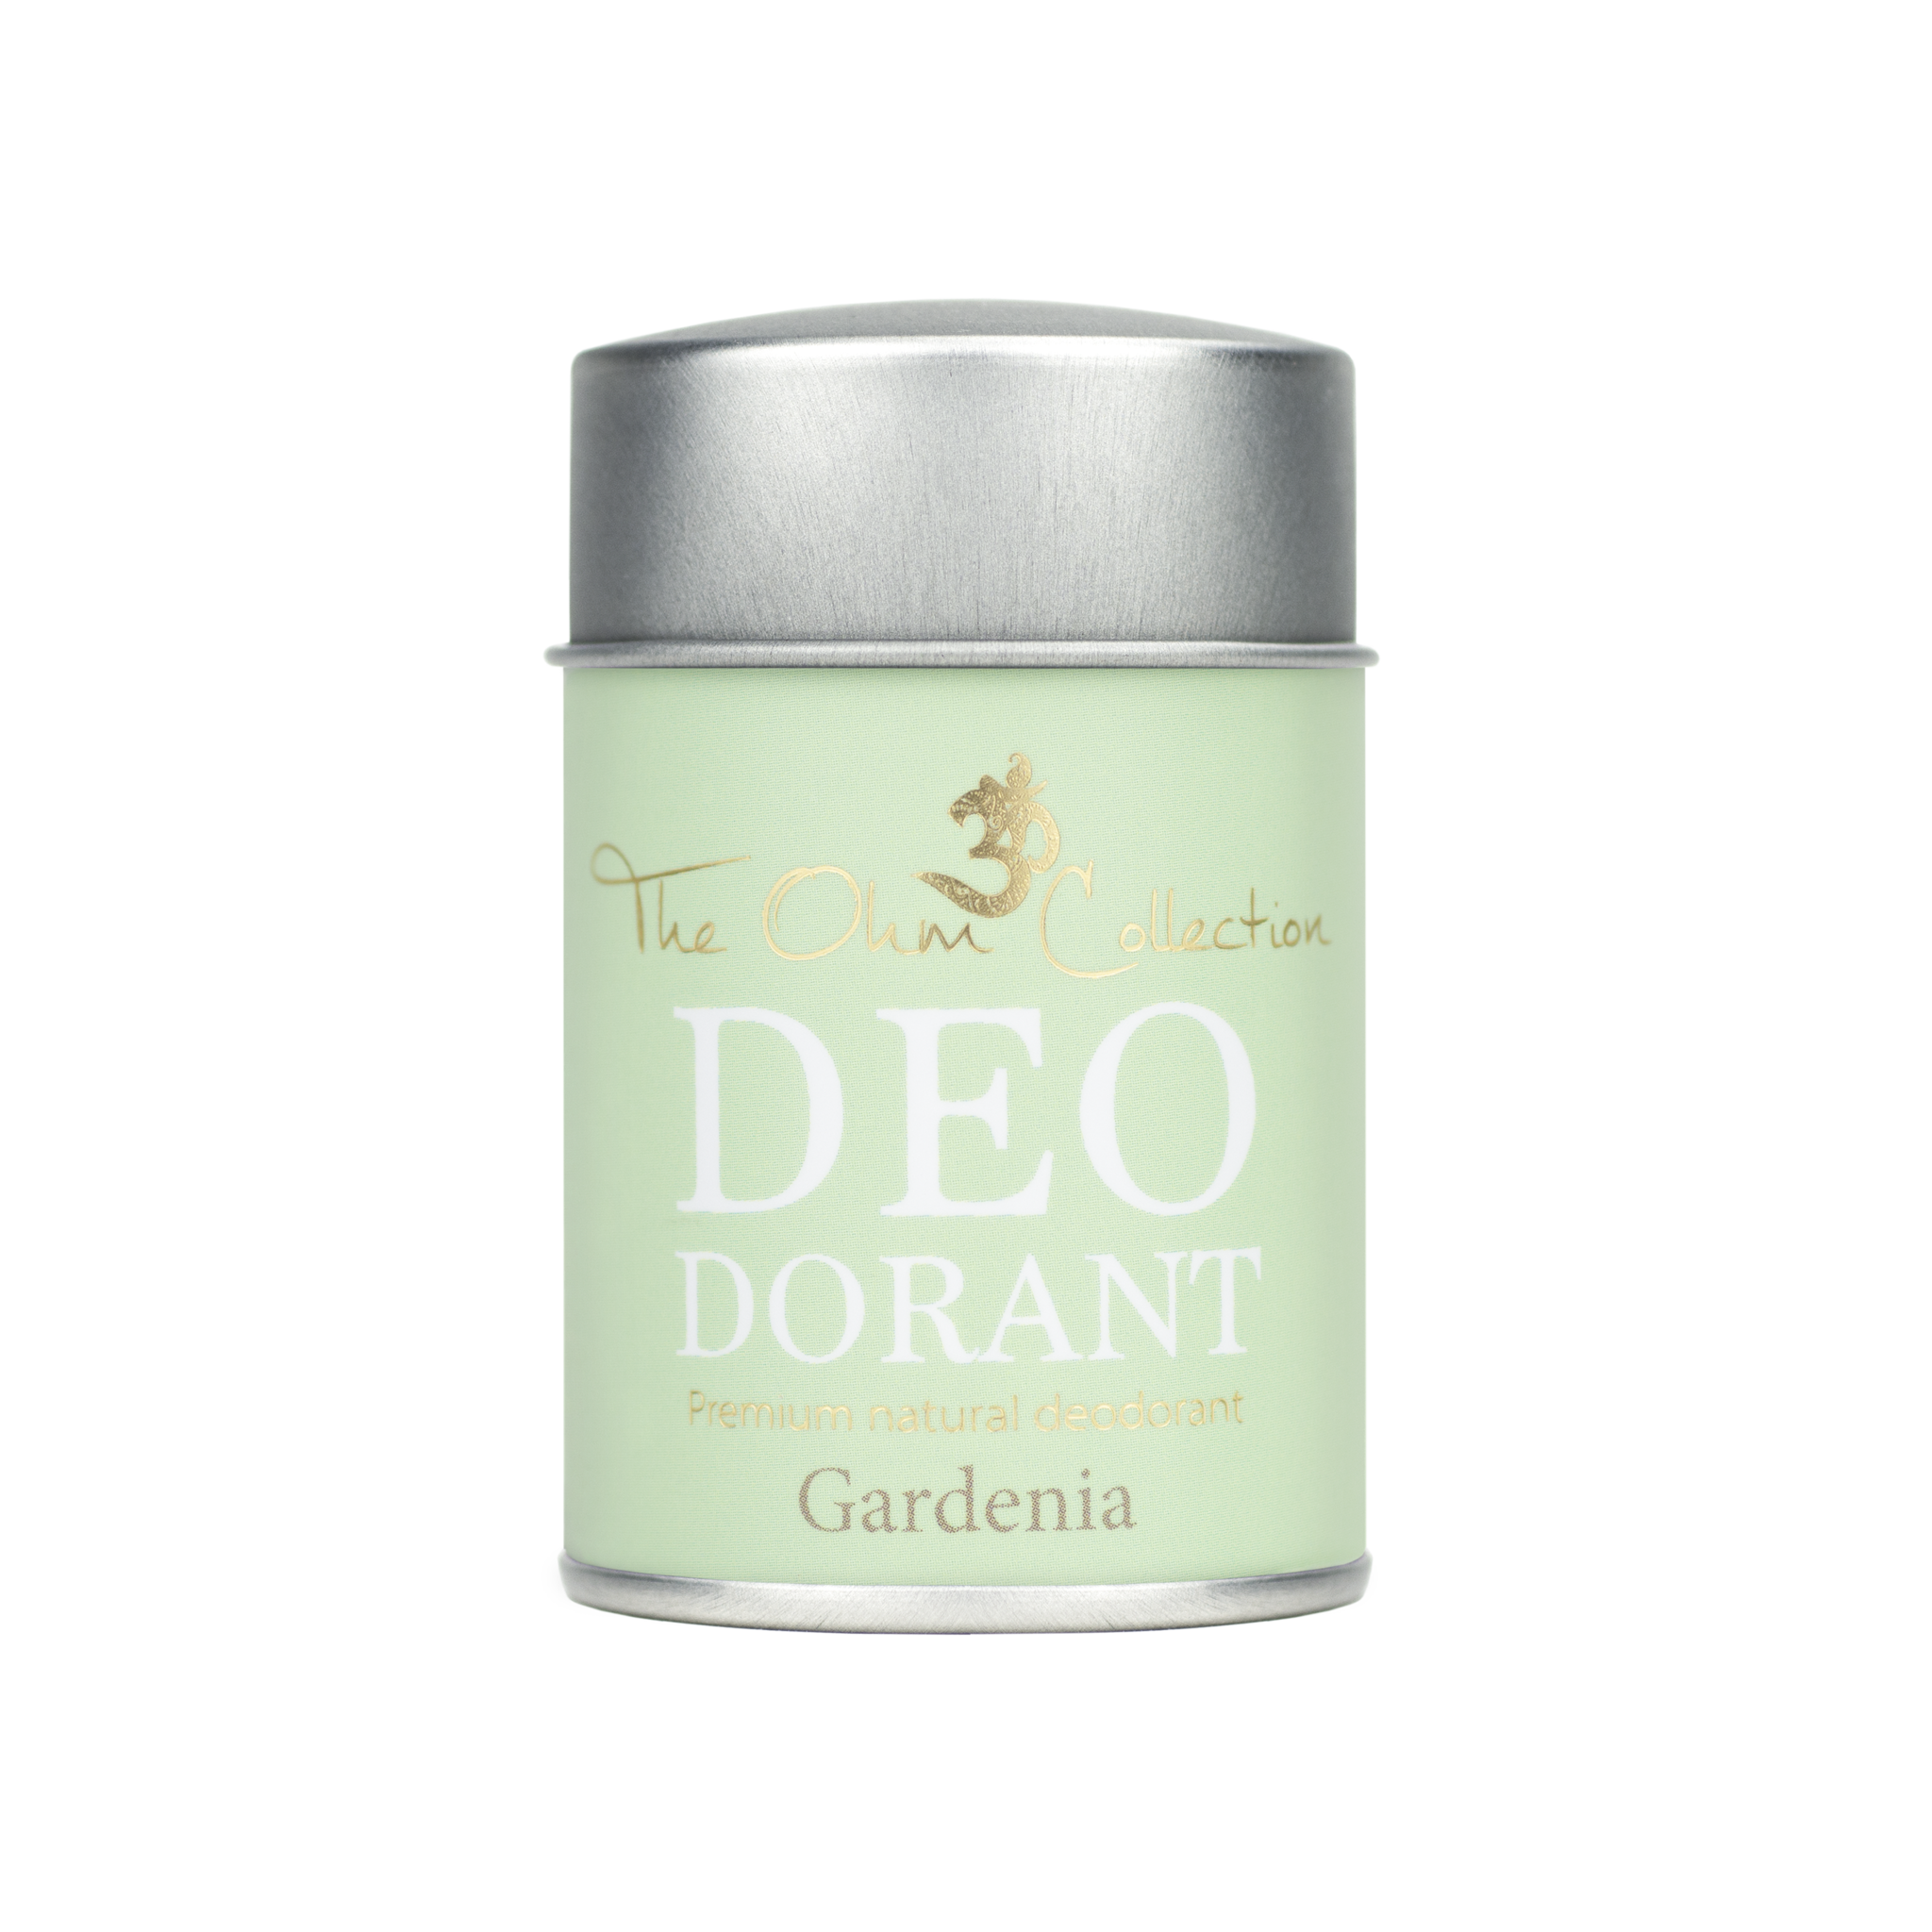 The Ohm Collection Deo Dorant Poeder Gardenia - 50g